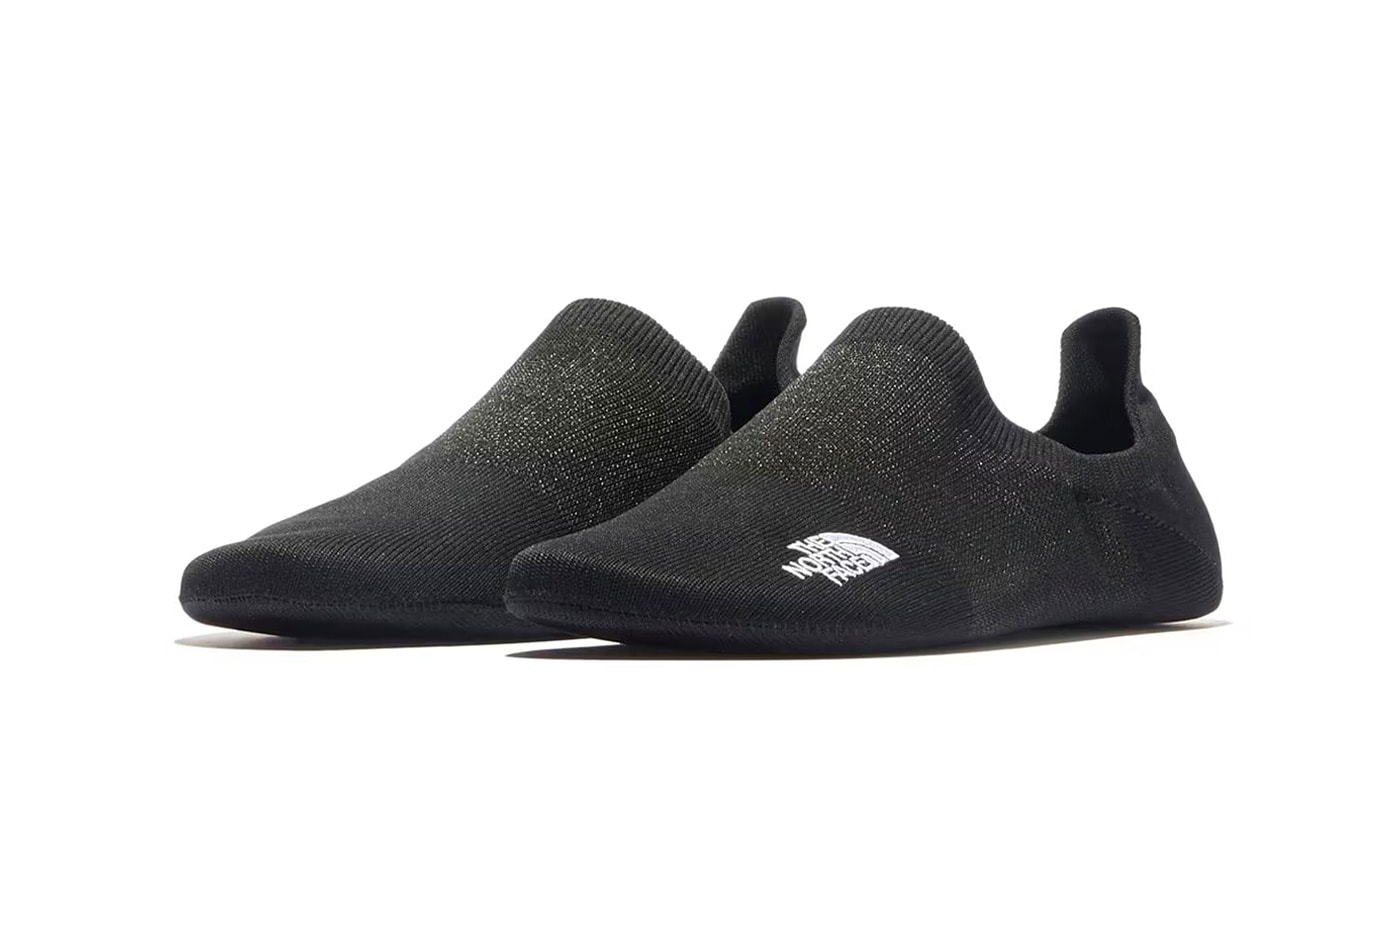 The North Face 正式推出「Portable Slipper」拖鞋、「Nuptse Bootie Socks」襪款